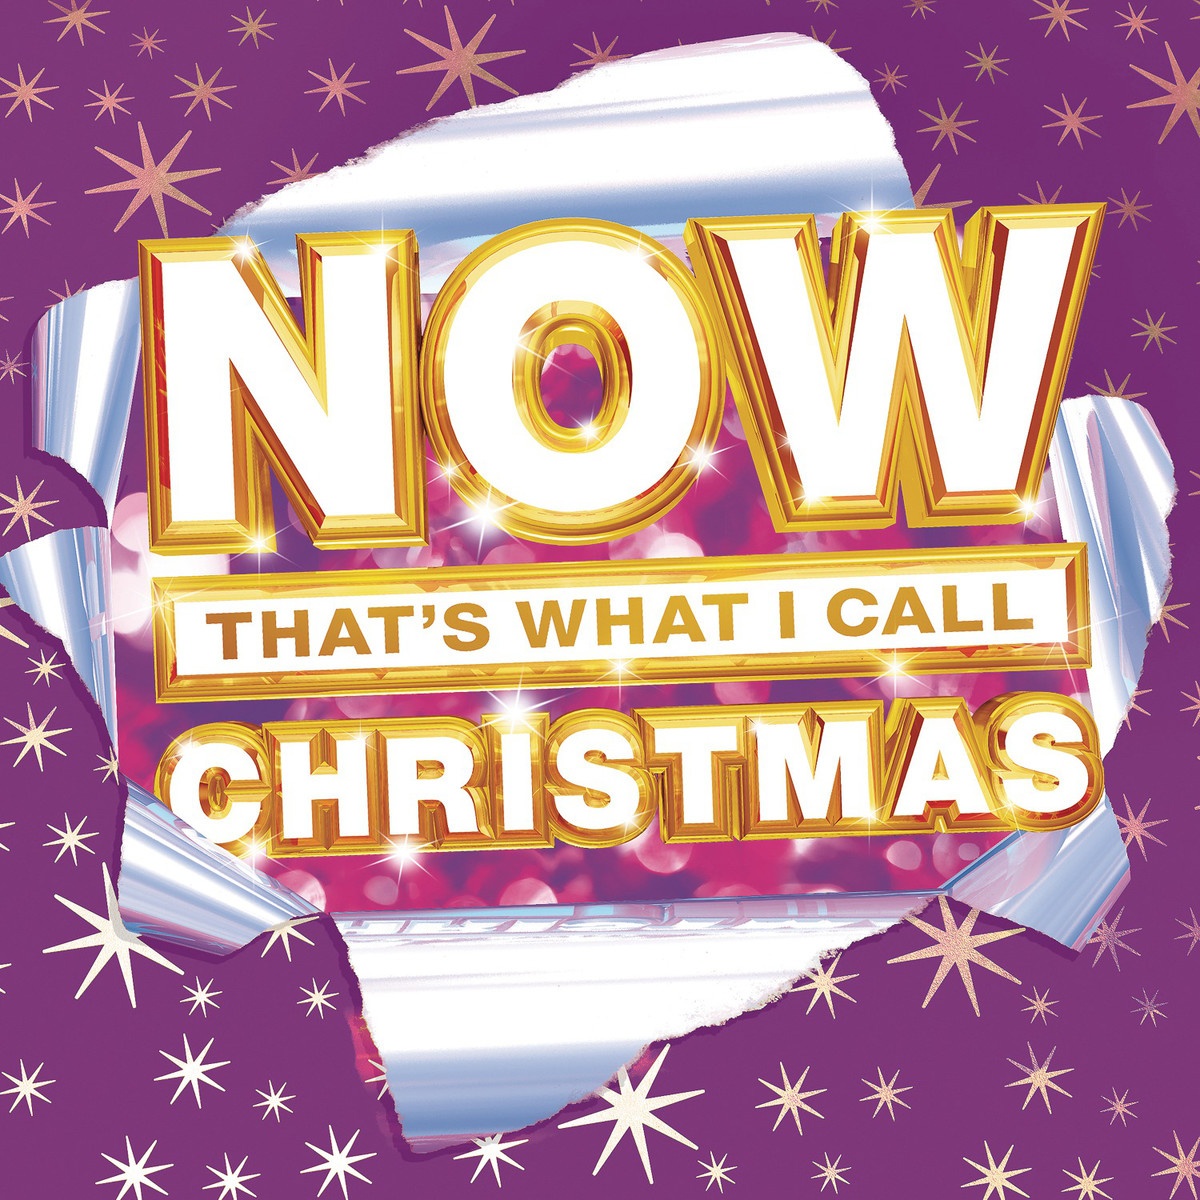 White Christmas (1998 Voice of Christmas Version)